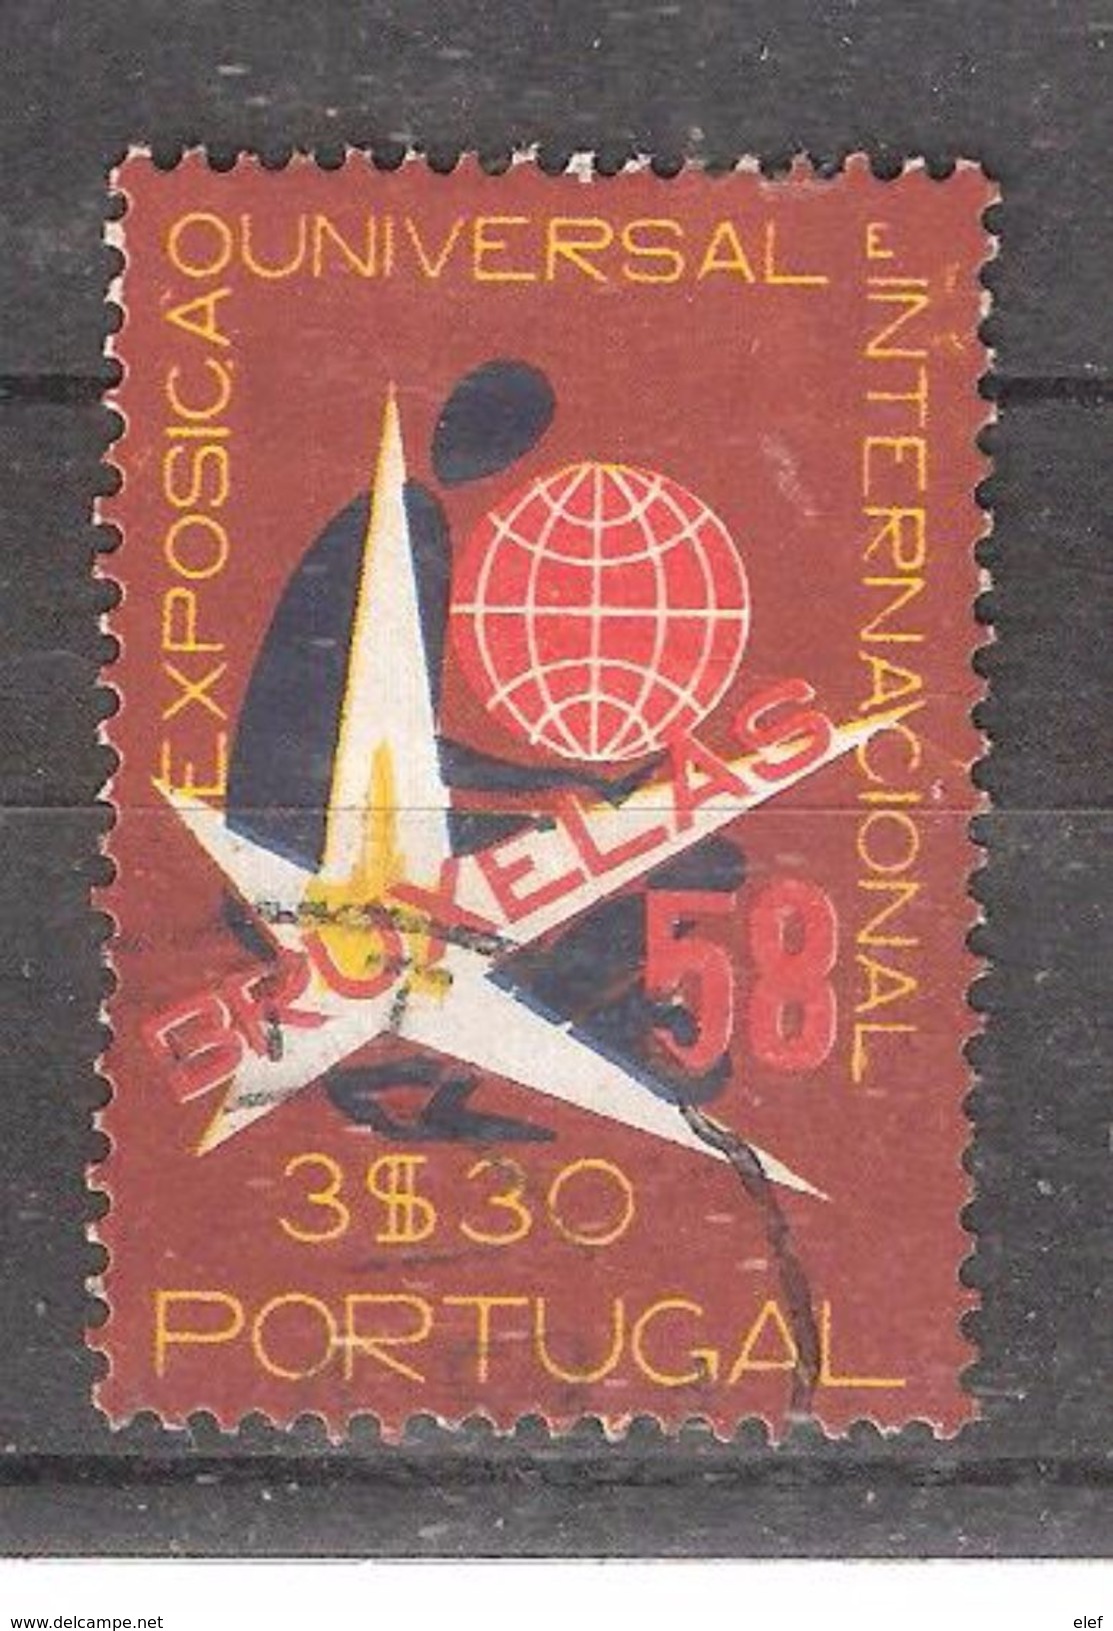 PORTUGAL, 1958, Yvert N° 844, Exposition Universelle Bruxelles 58 , 3 E 30 , Obl, TB - 1958 – Brussels (Belgium)